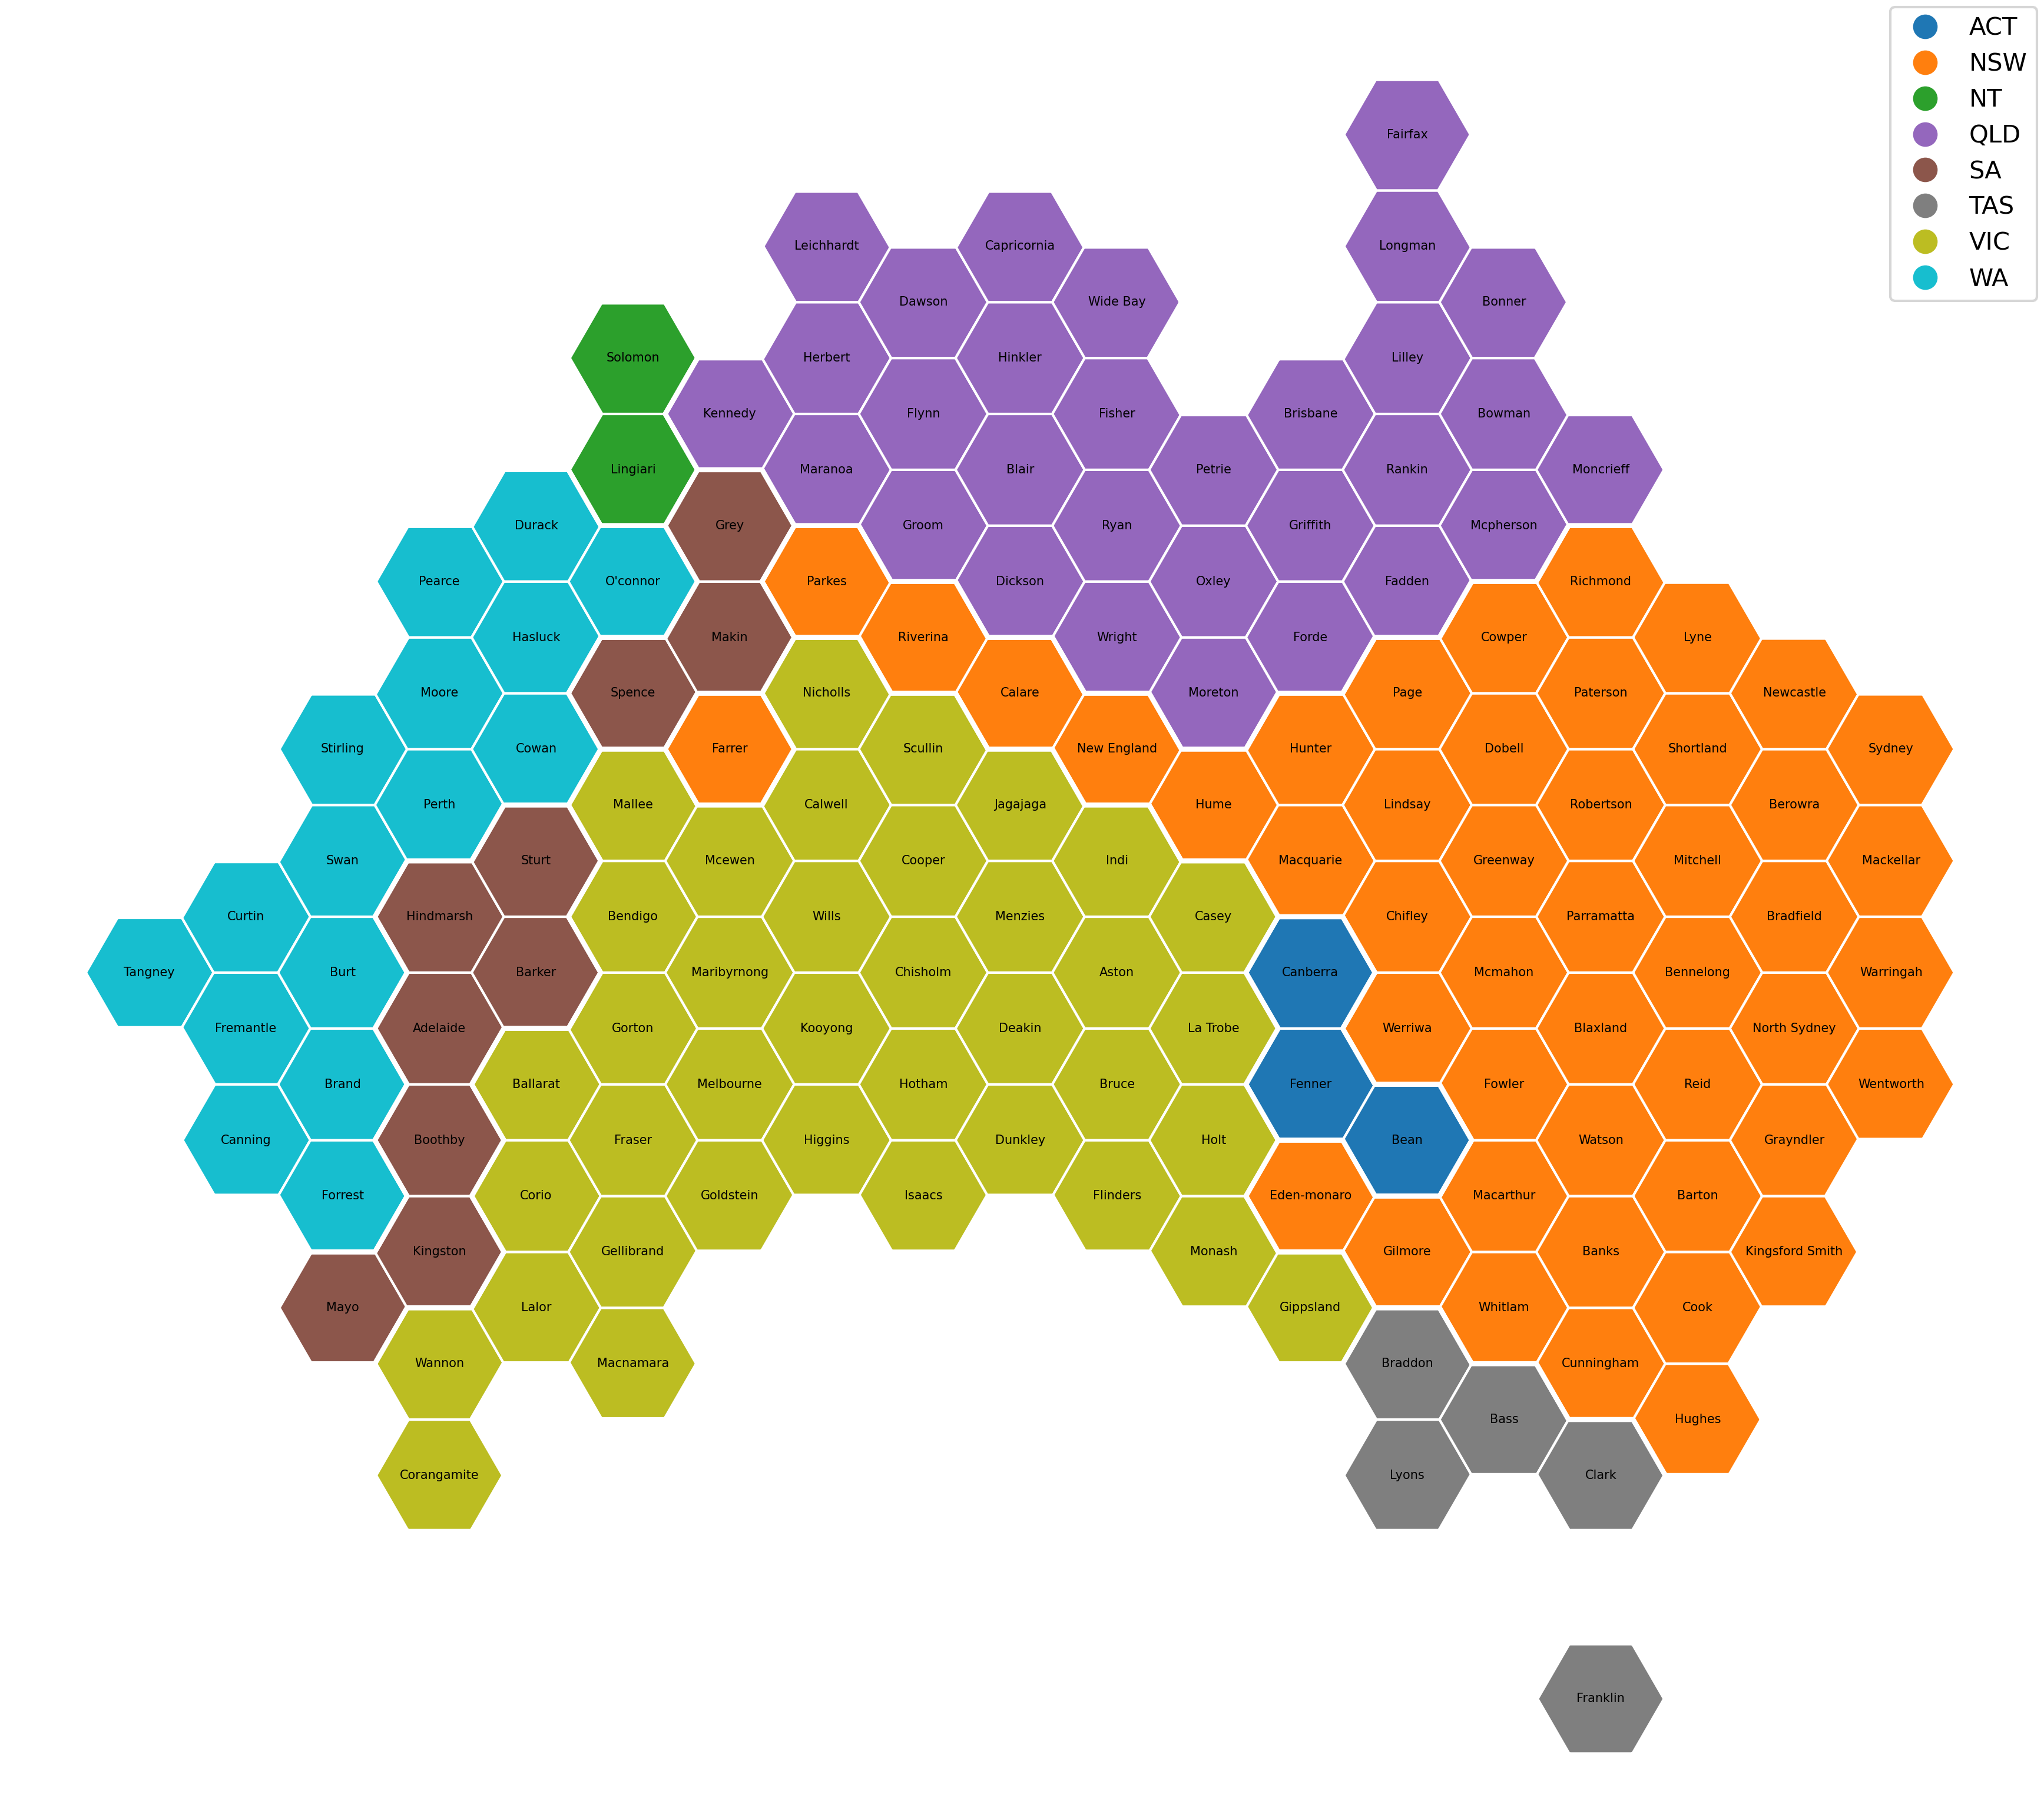 Plot of Australia's's electorates as equal area hexagons.